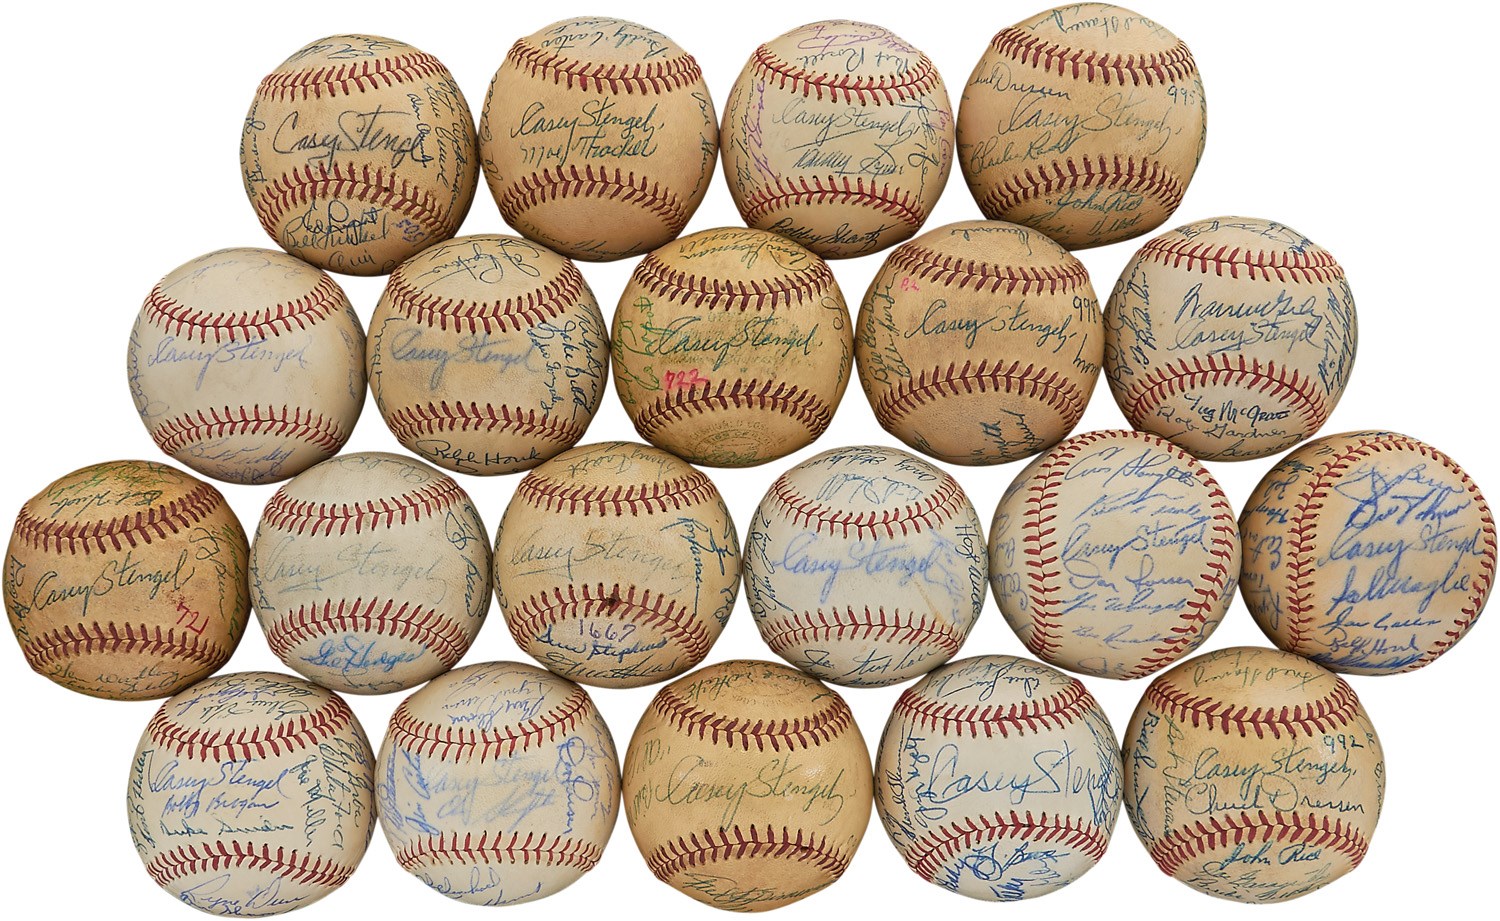 1940s-50s Yankees, HOF and All-Star Signed Baseballs ALL w/Casey Stengel (44)